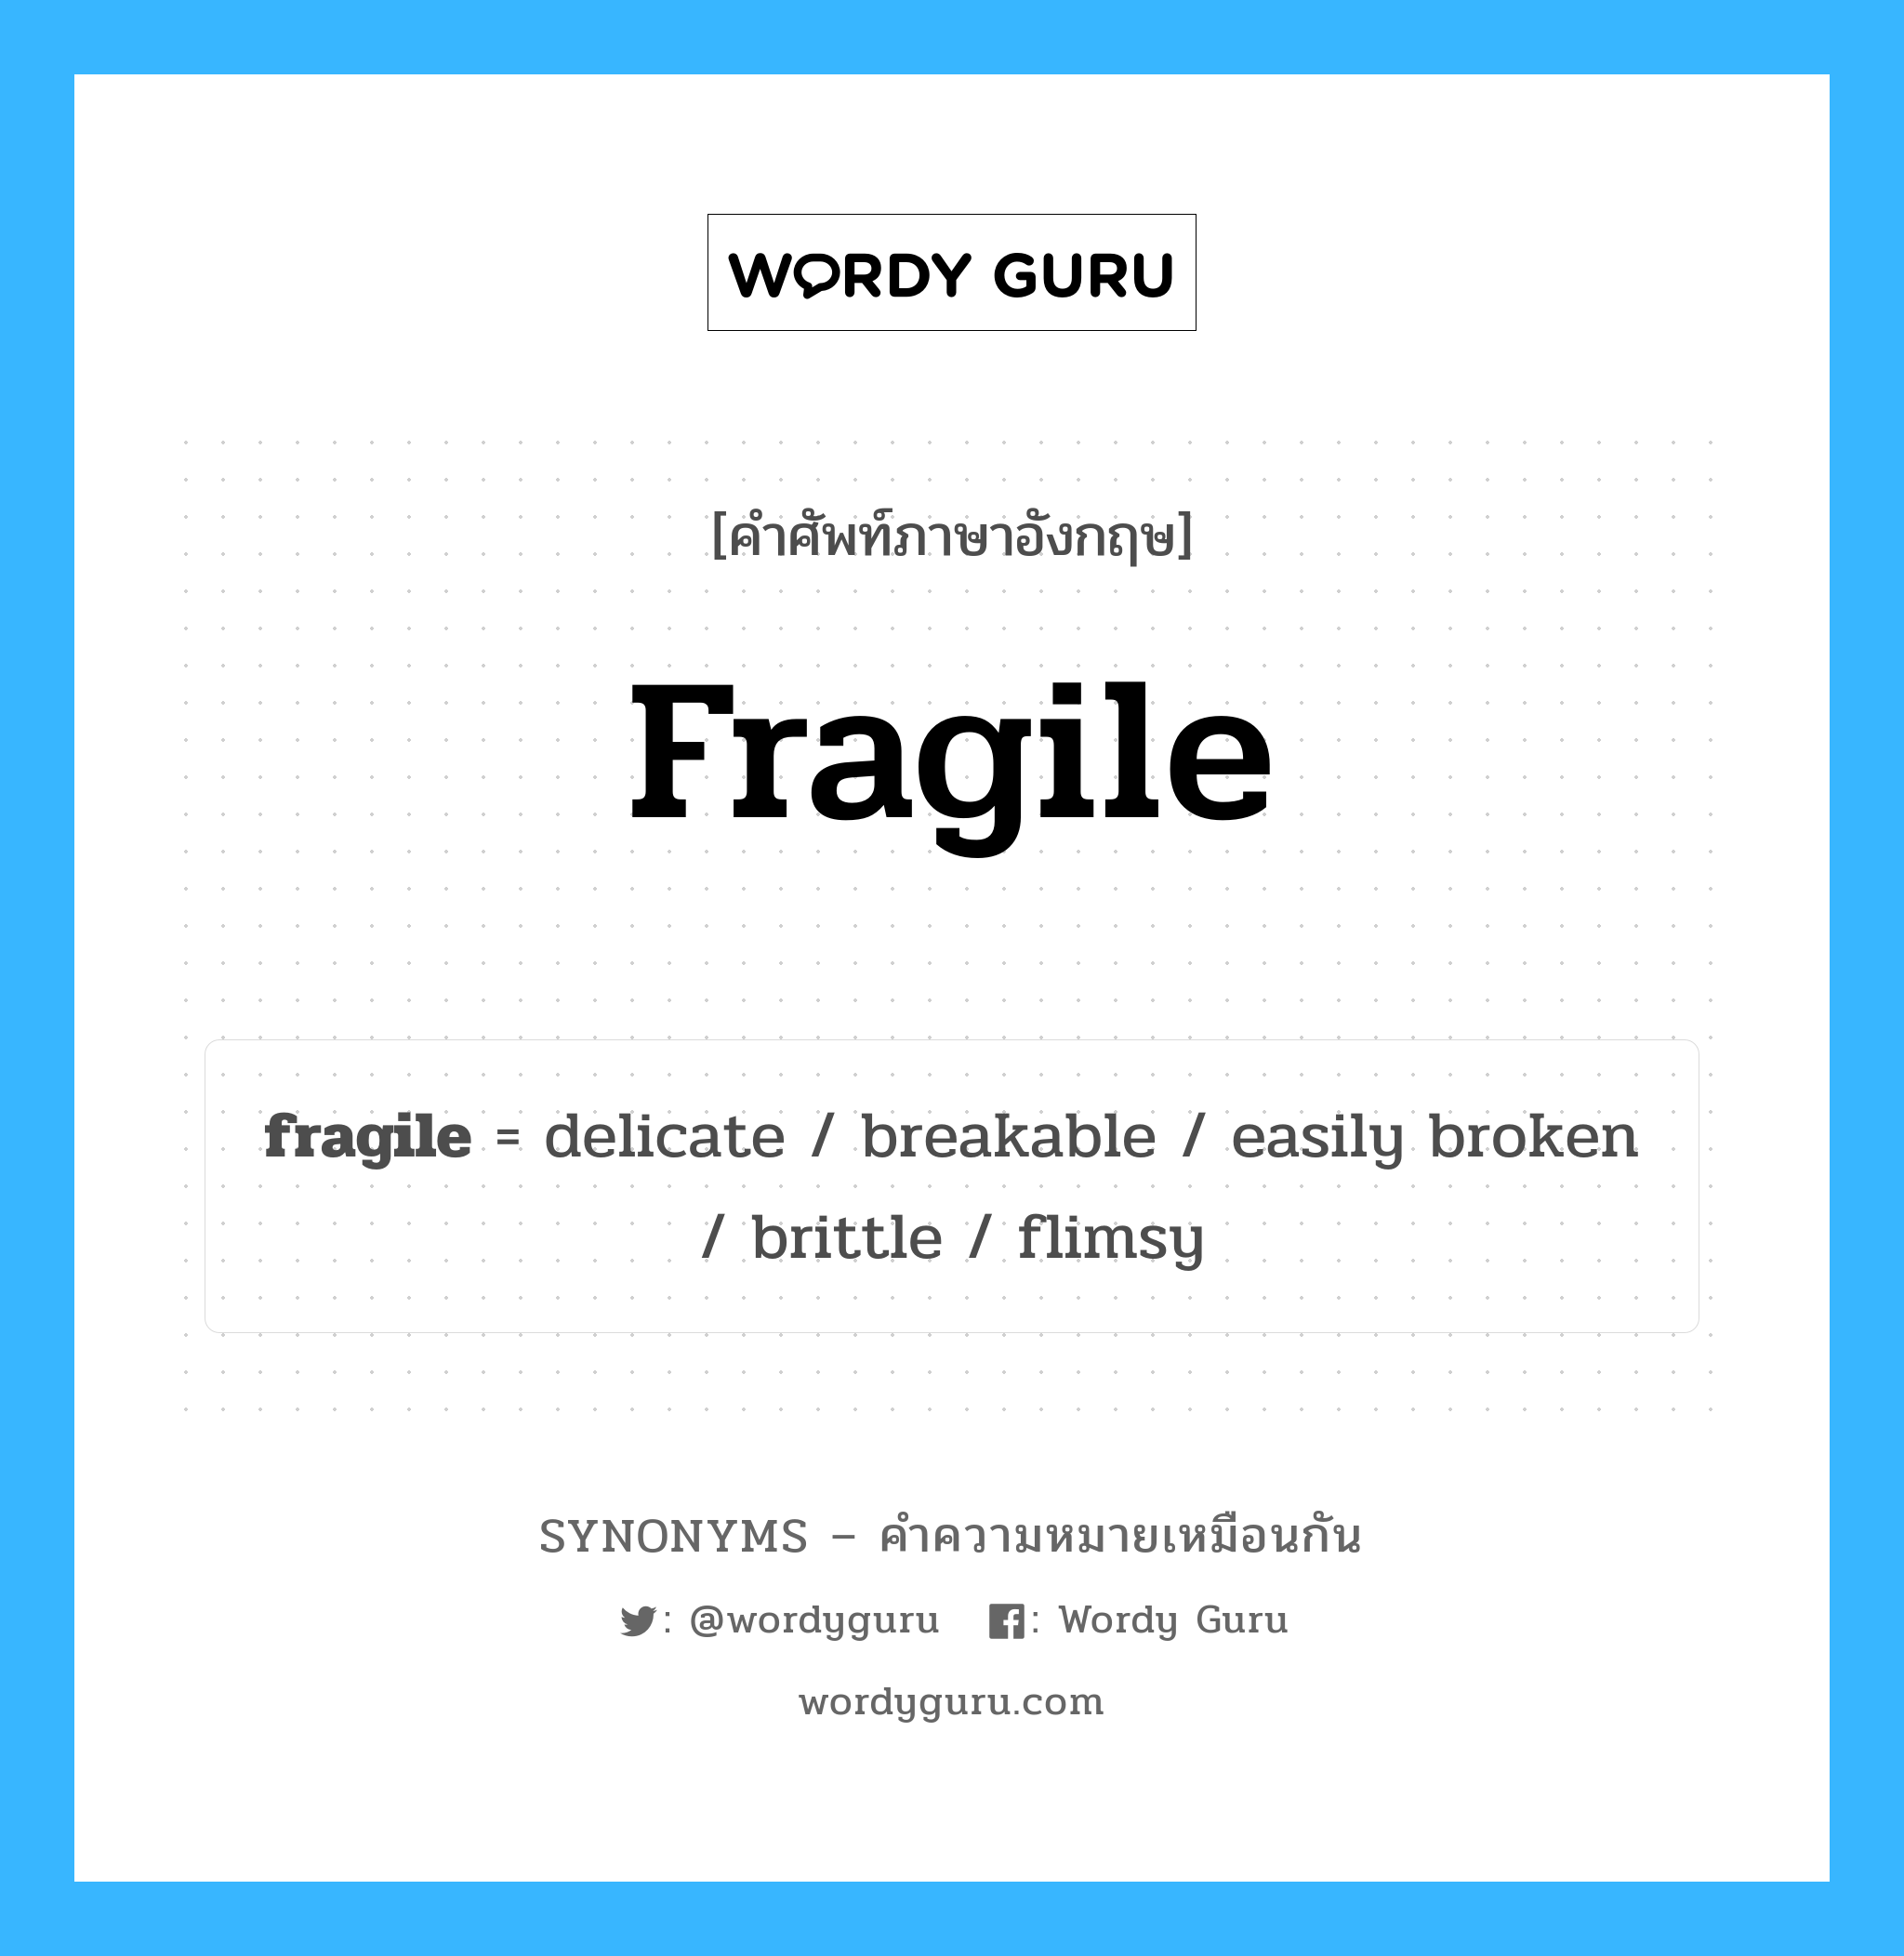 delicate เป็นหนึ่งใน fragile และมีคำอื่น ๆ อีกดังนี้, คำศัพท์ภาษาอังกฤษ delicate ความหมายคล้ายกันกับ fragile แปลว่า ละเอียดอ่อน หมวด fragile